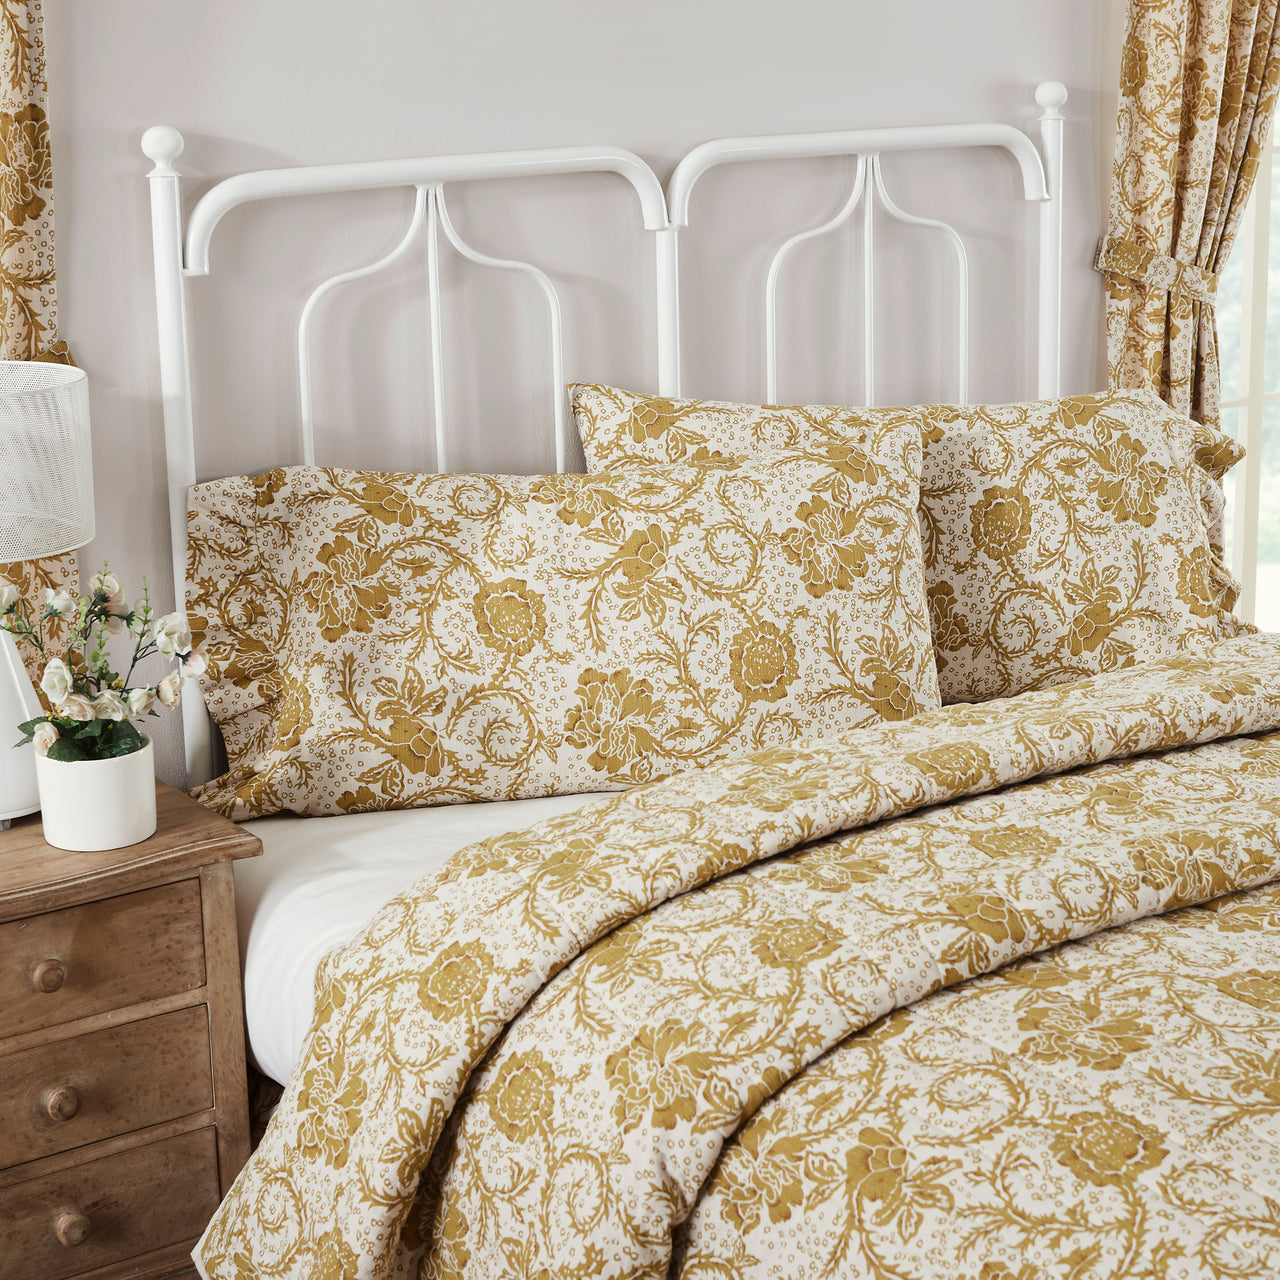 Dorset Gold Floral Ruffled King Pillow Case Set of 2 21x36+4 VHC Brands